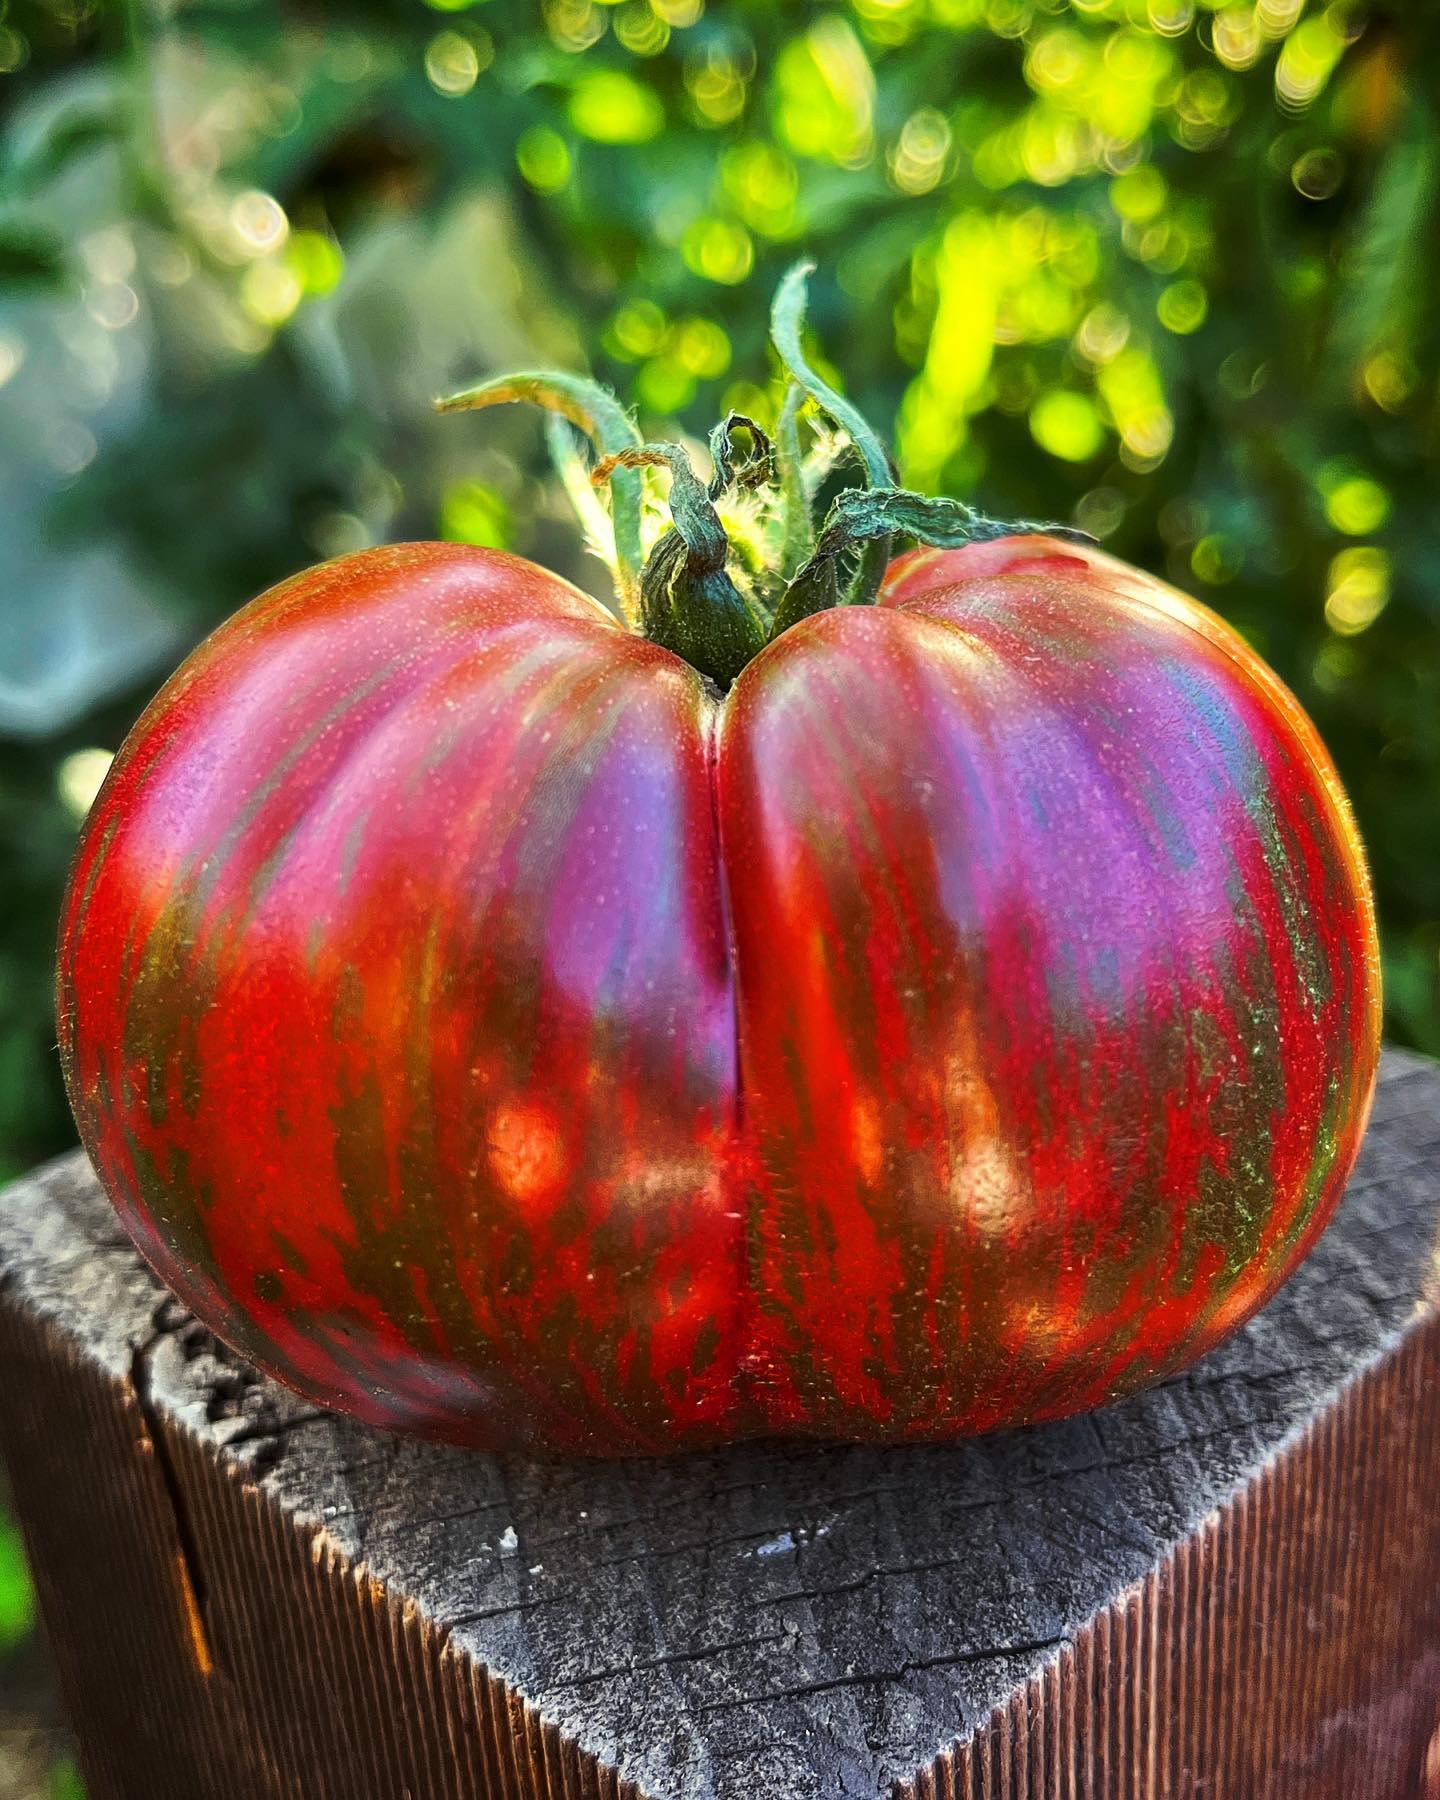 berkeley tie dye tomato